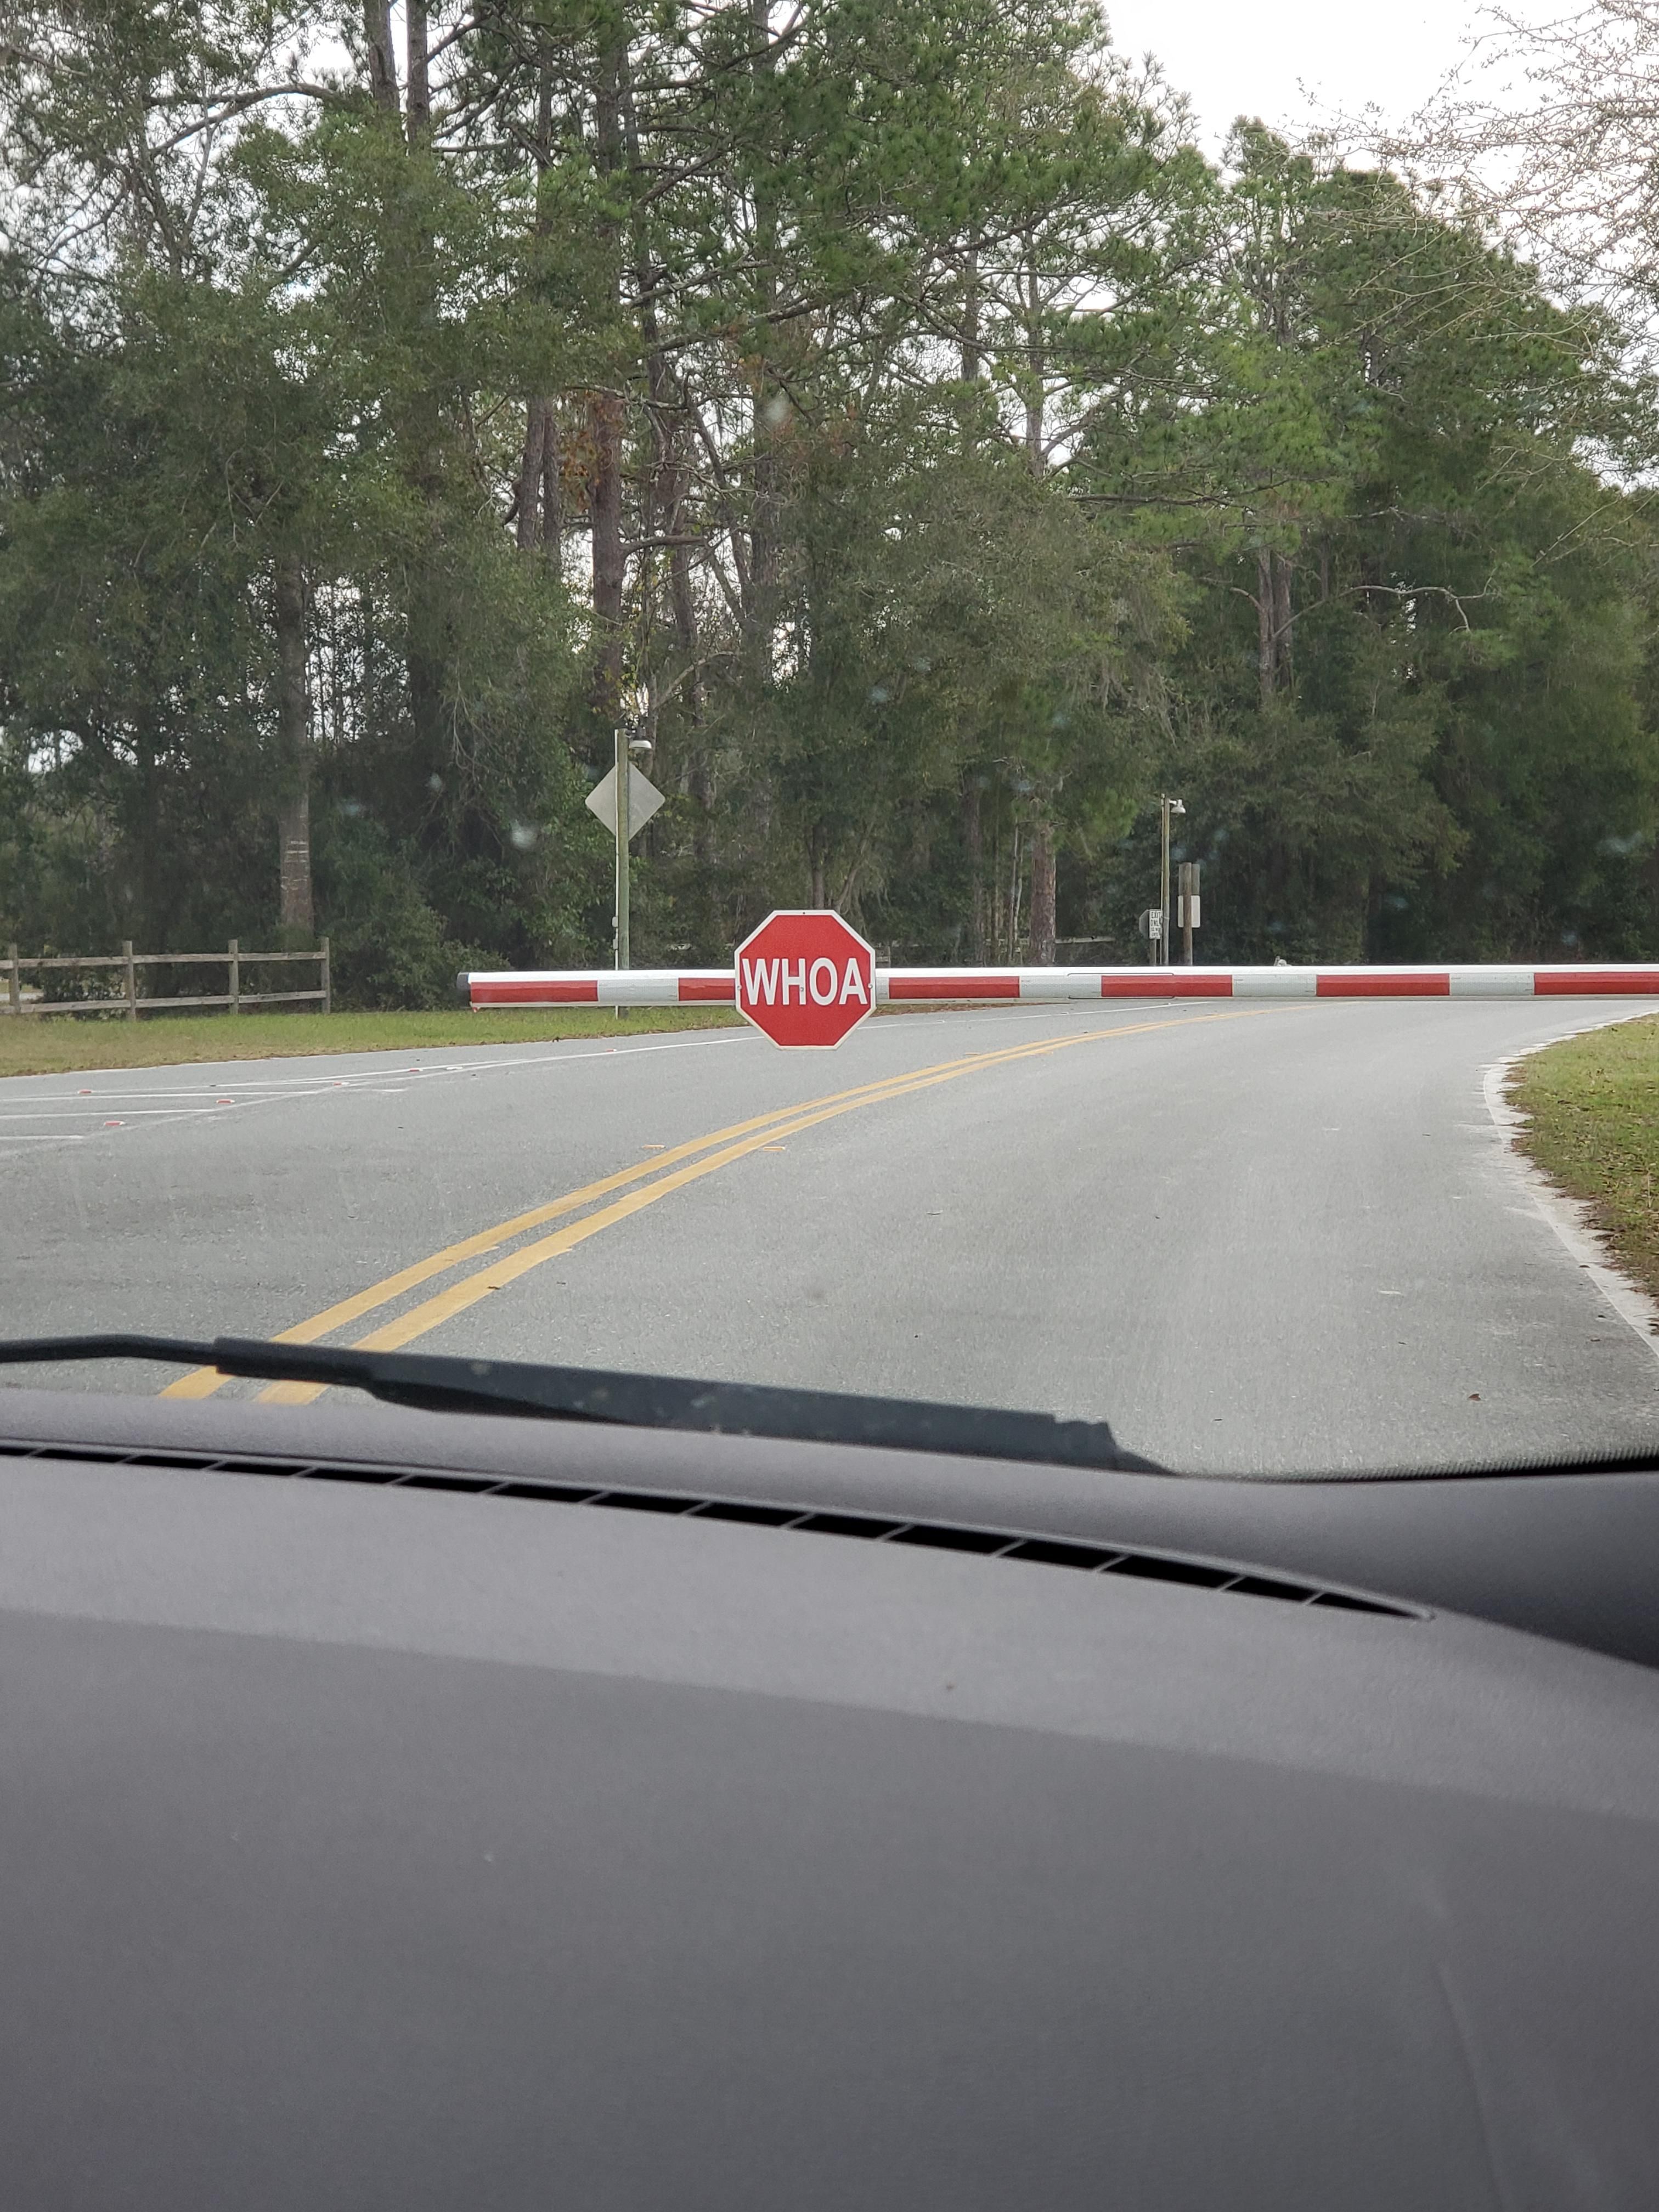 An alternate stop sign